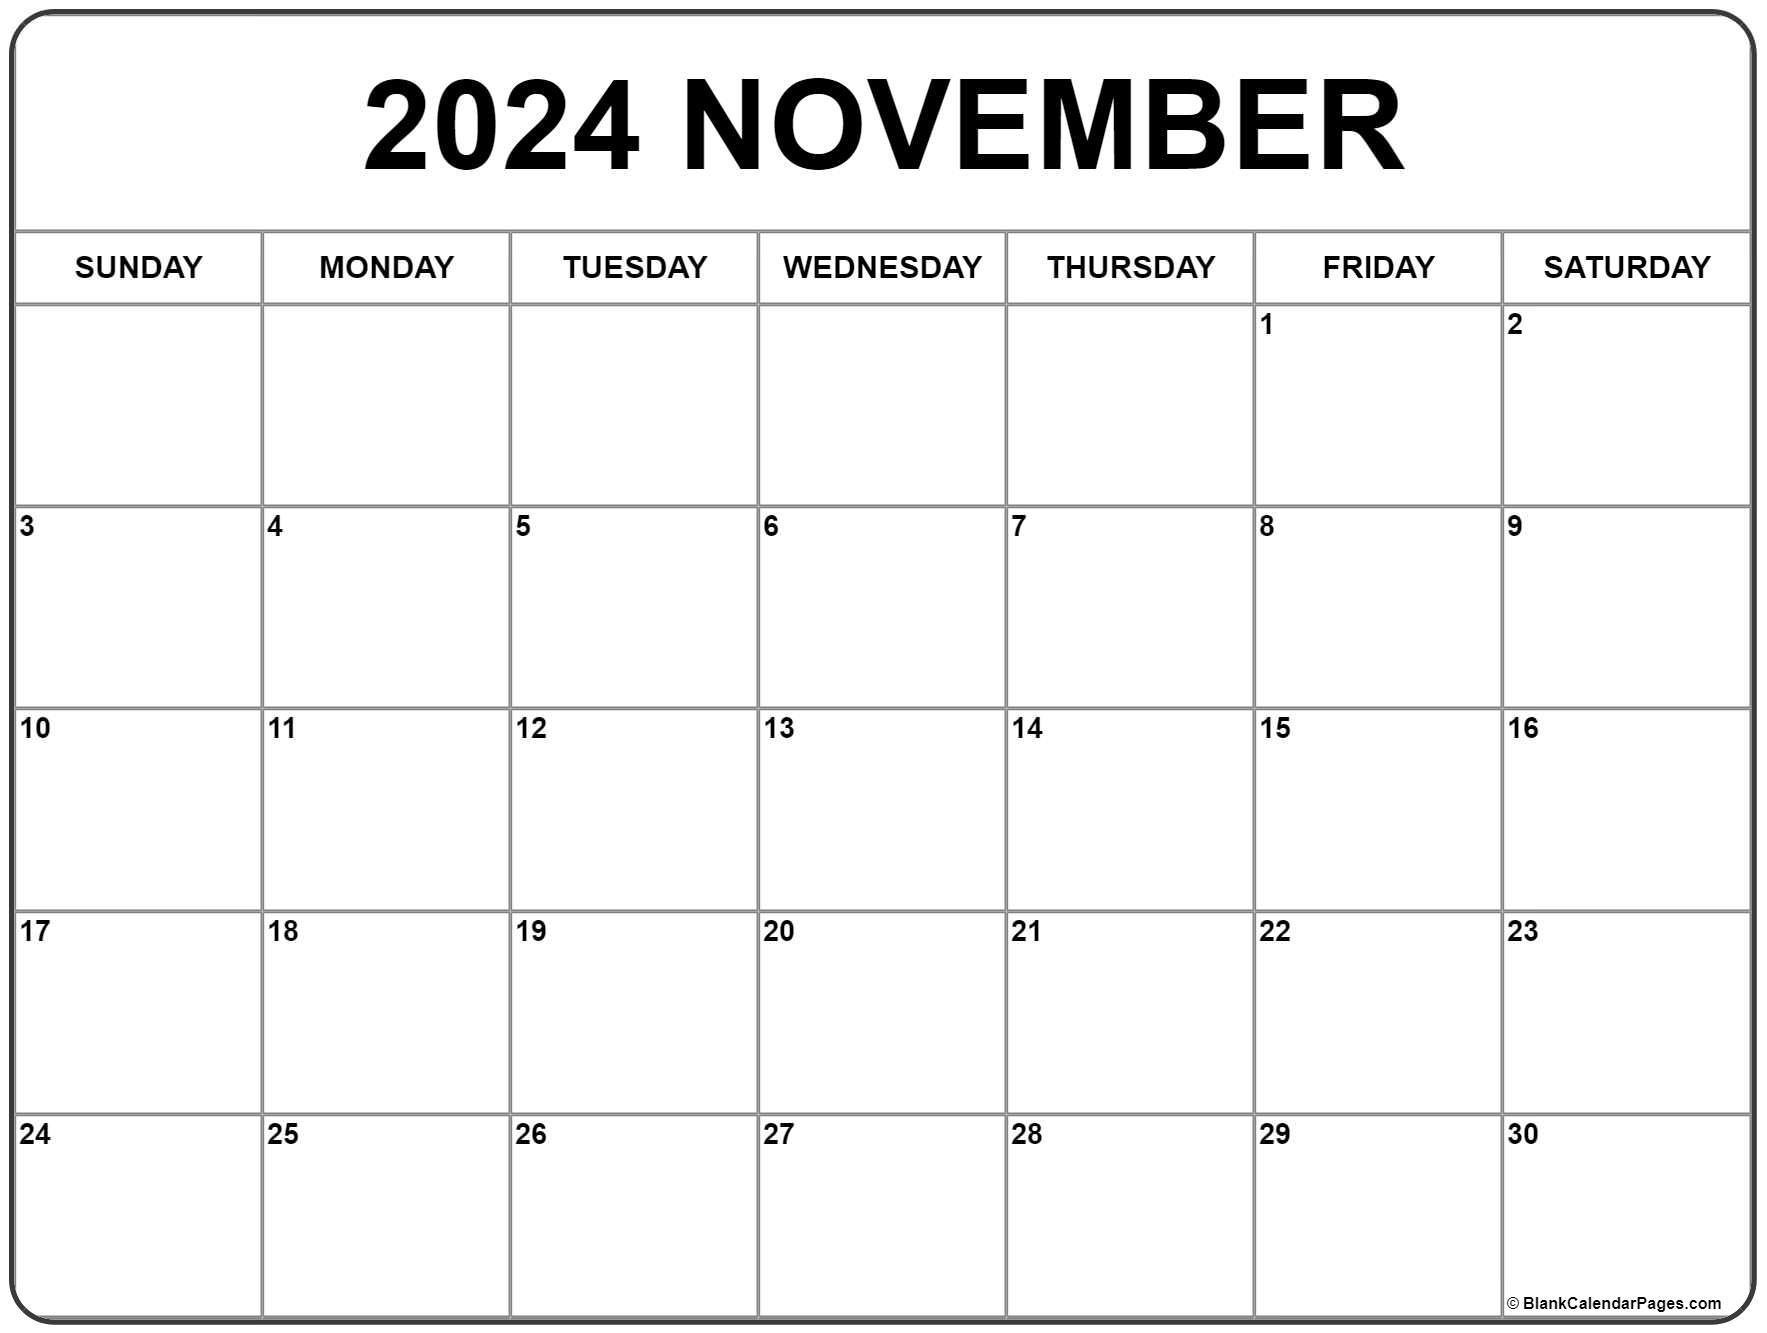 November 2024 Calendar | Free Printable Calendar within Free Printable Appointment Calendar November 2024